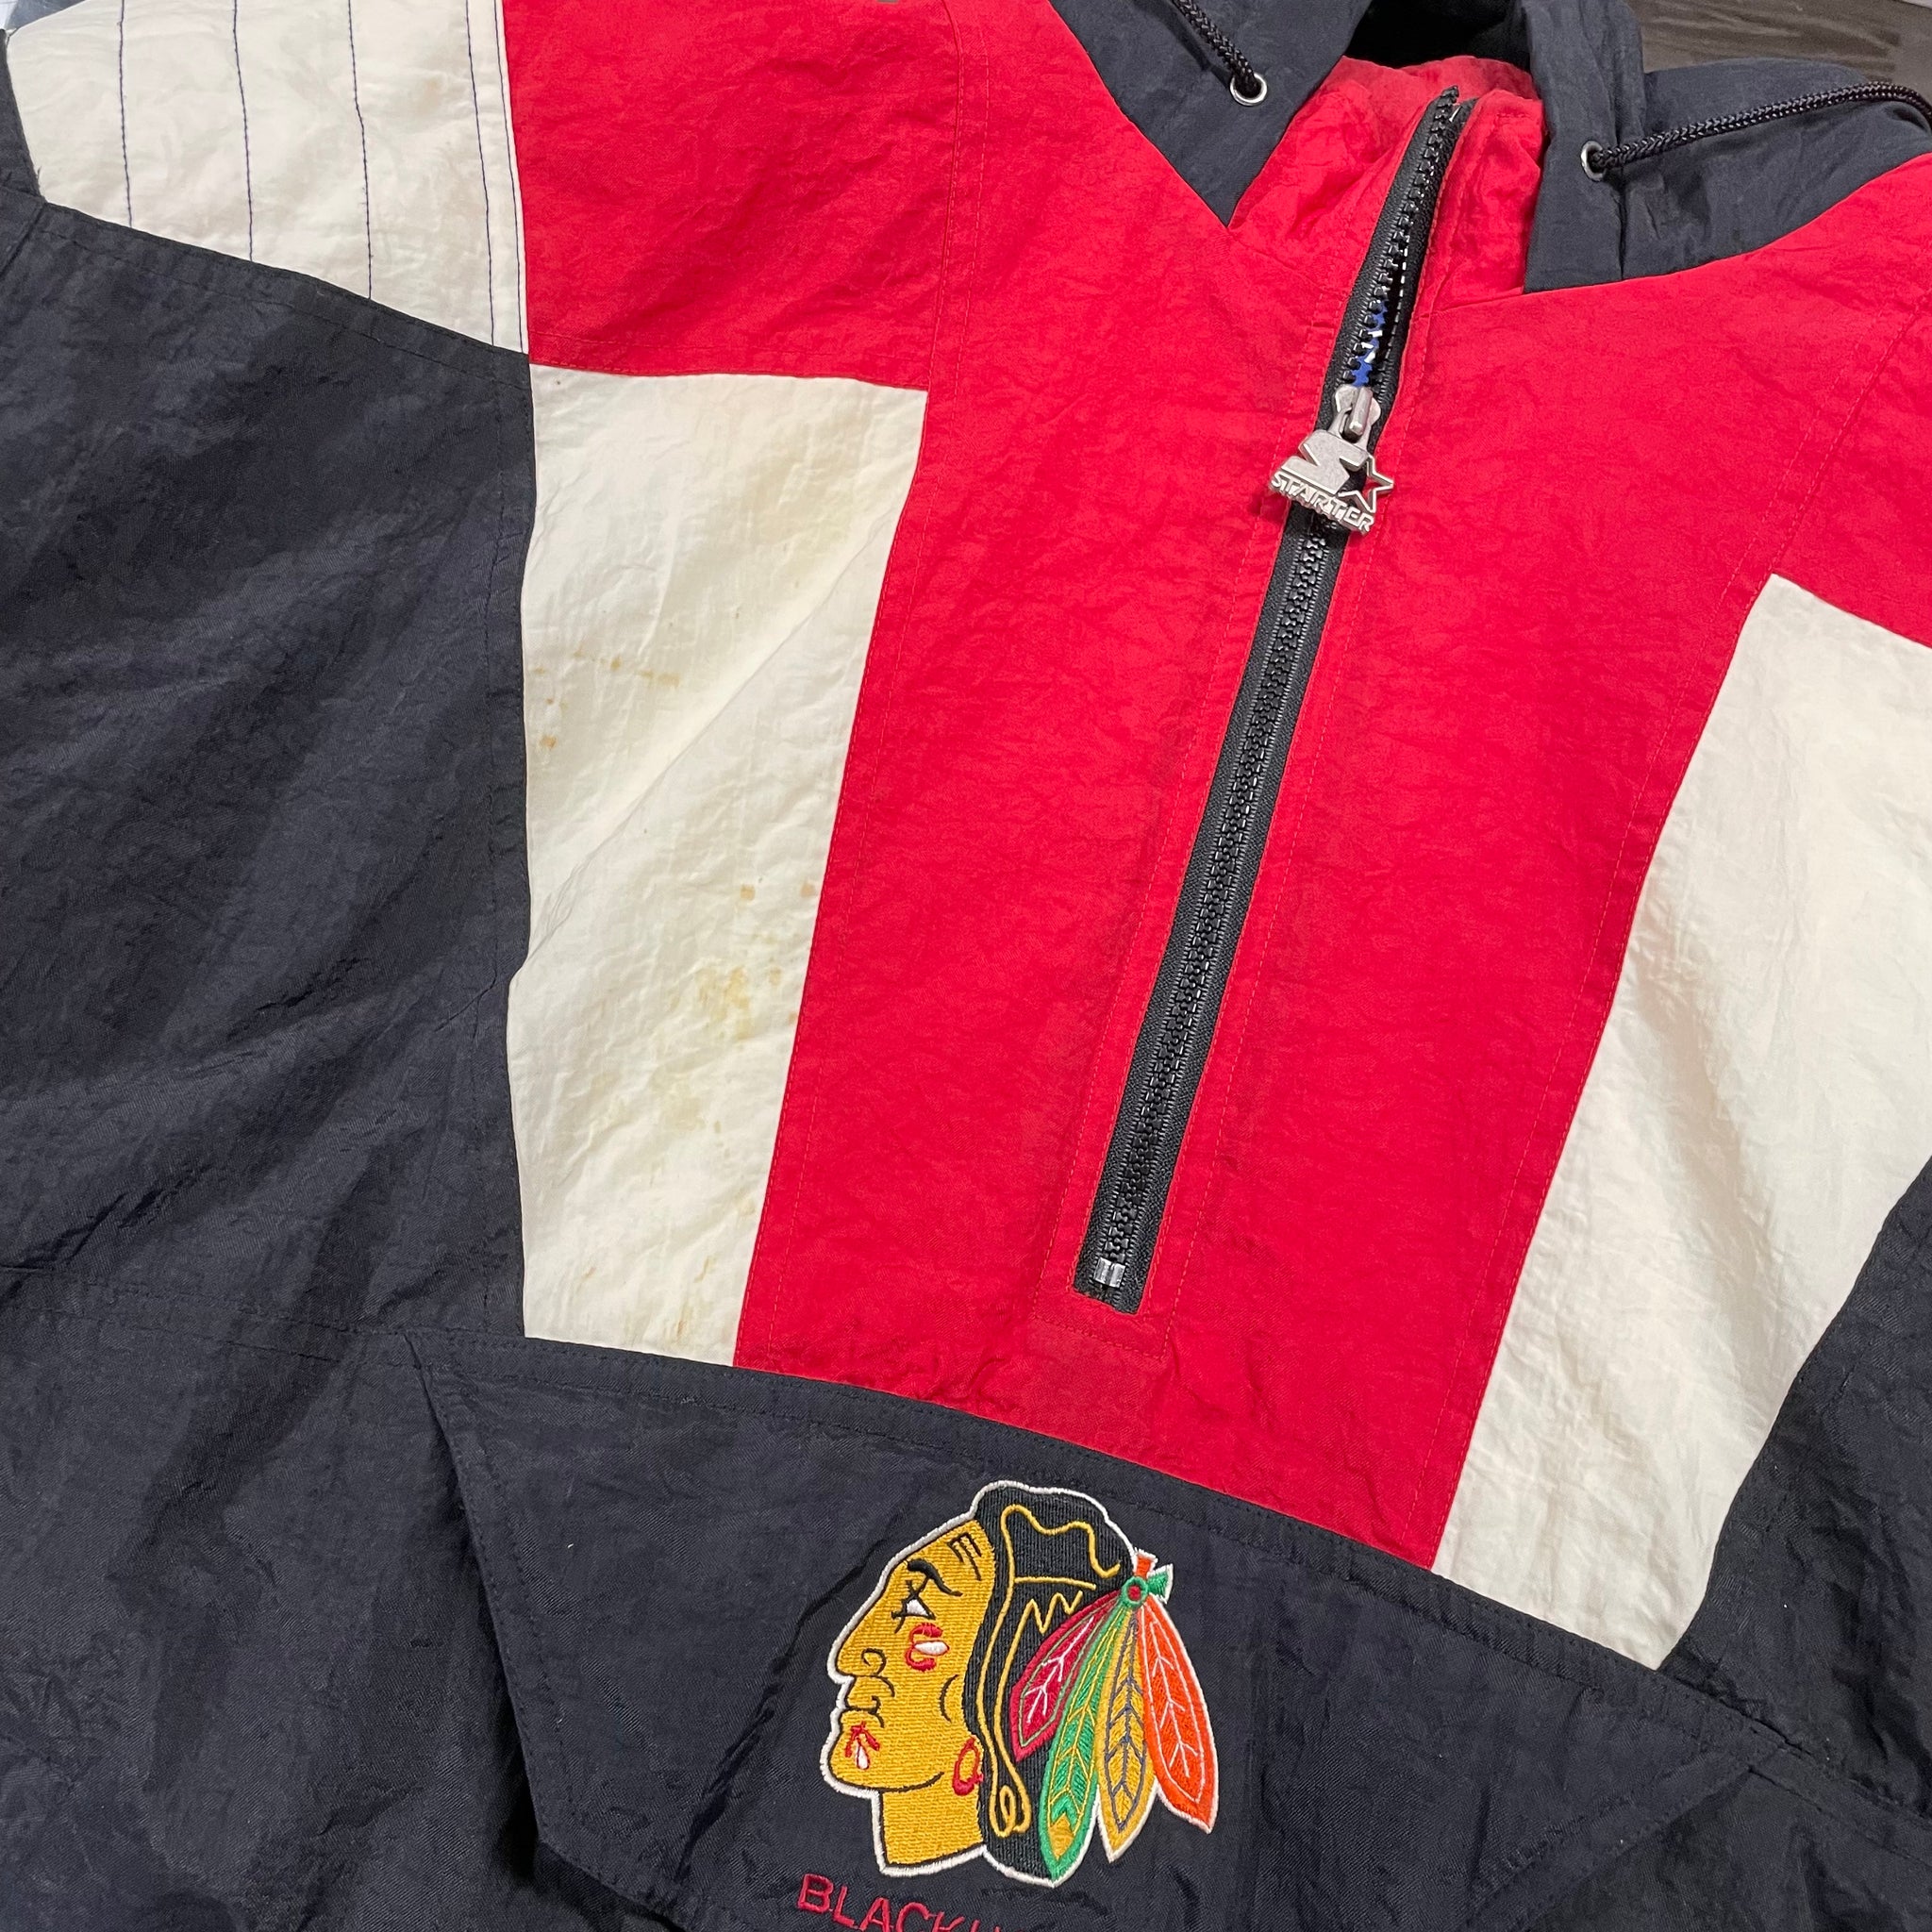 Chicago Blackhawks NHL STARTER Jacket XL Vintage 90's Pull Over